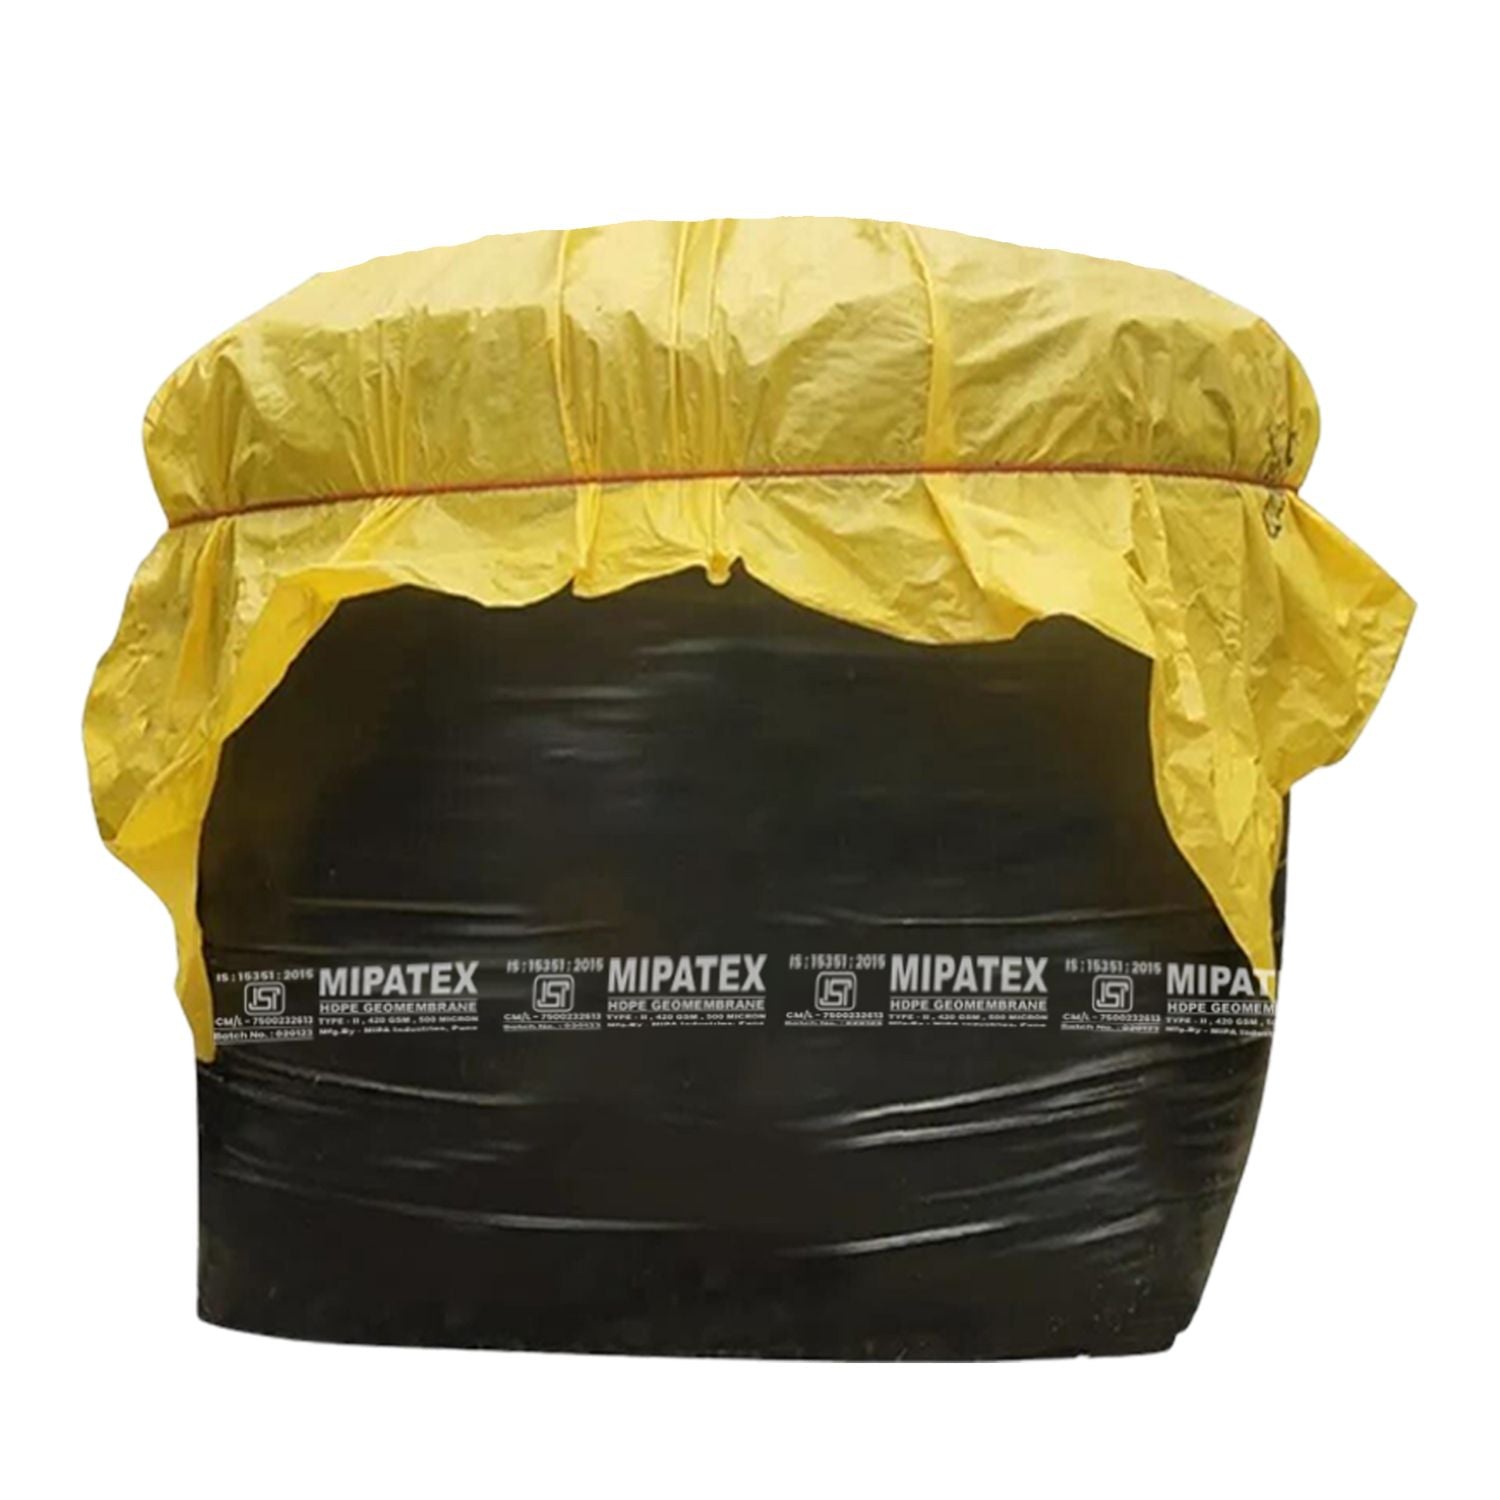 MIPATEX HDPE Silage Bags, Murghas bag, Heavy-Duty silage bag for fodder storage, 500 micron Black